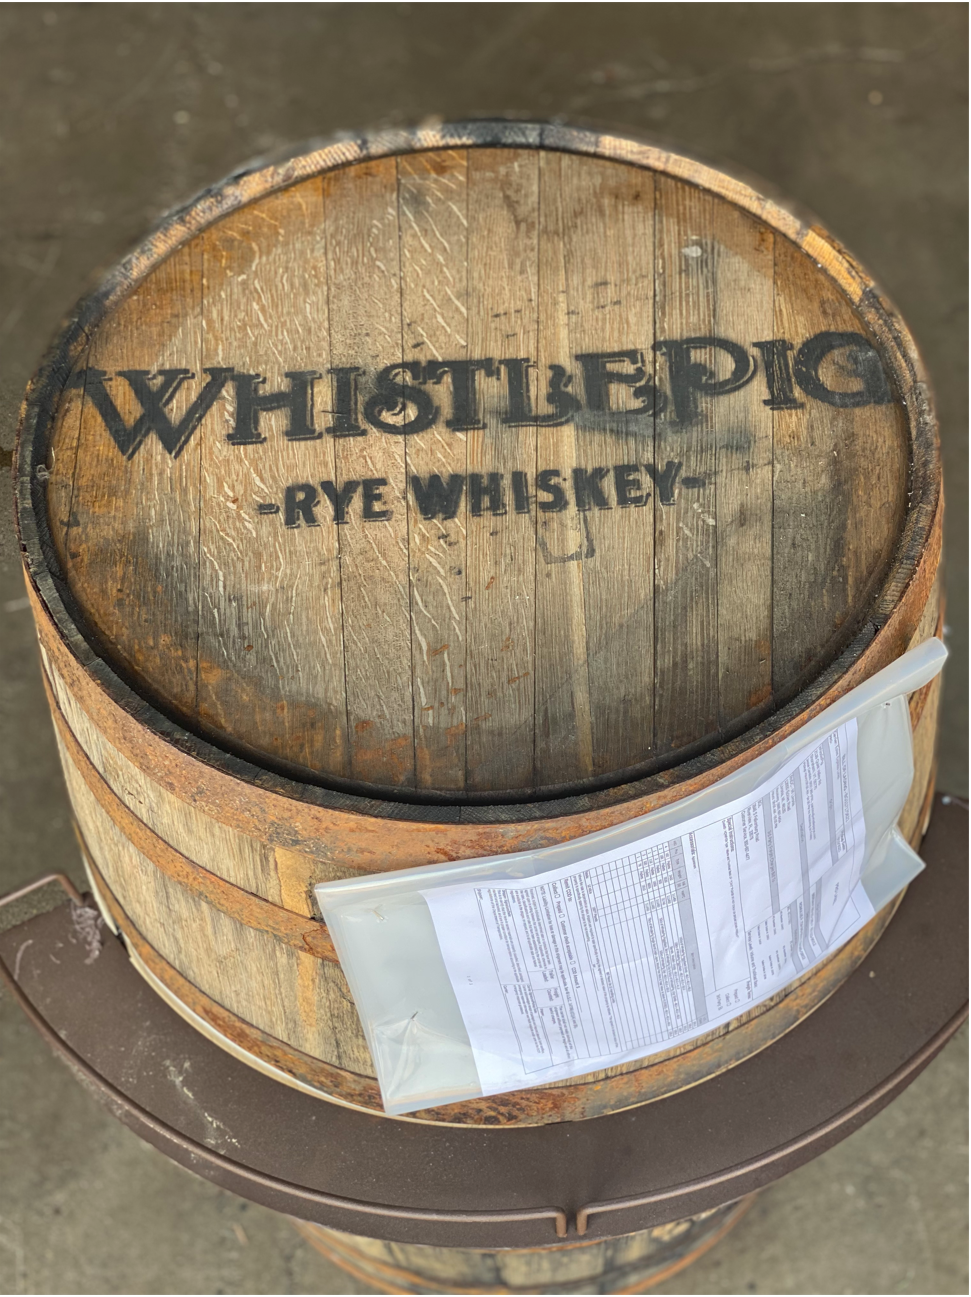 Furniture Grade - Whistle Pig - Rye Whiskey Barrel 53 Gallon - Motor City Barrels